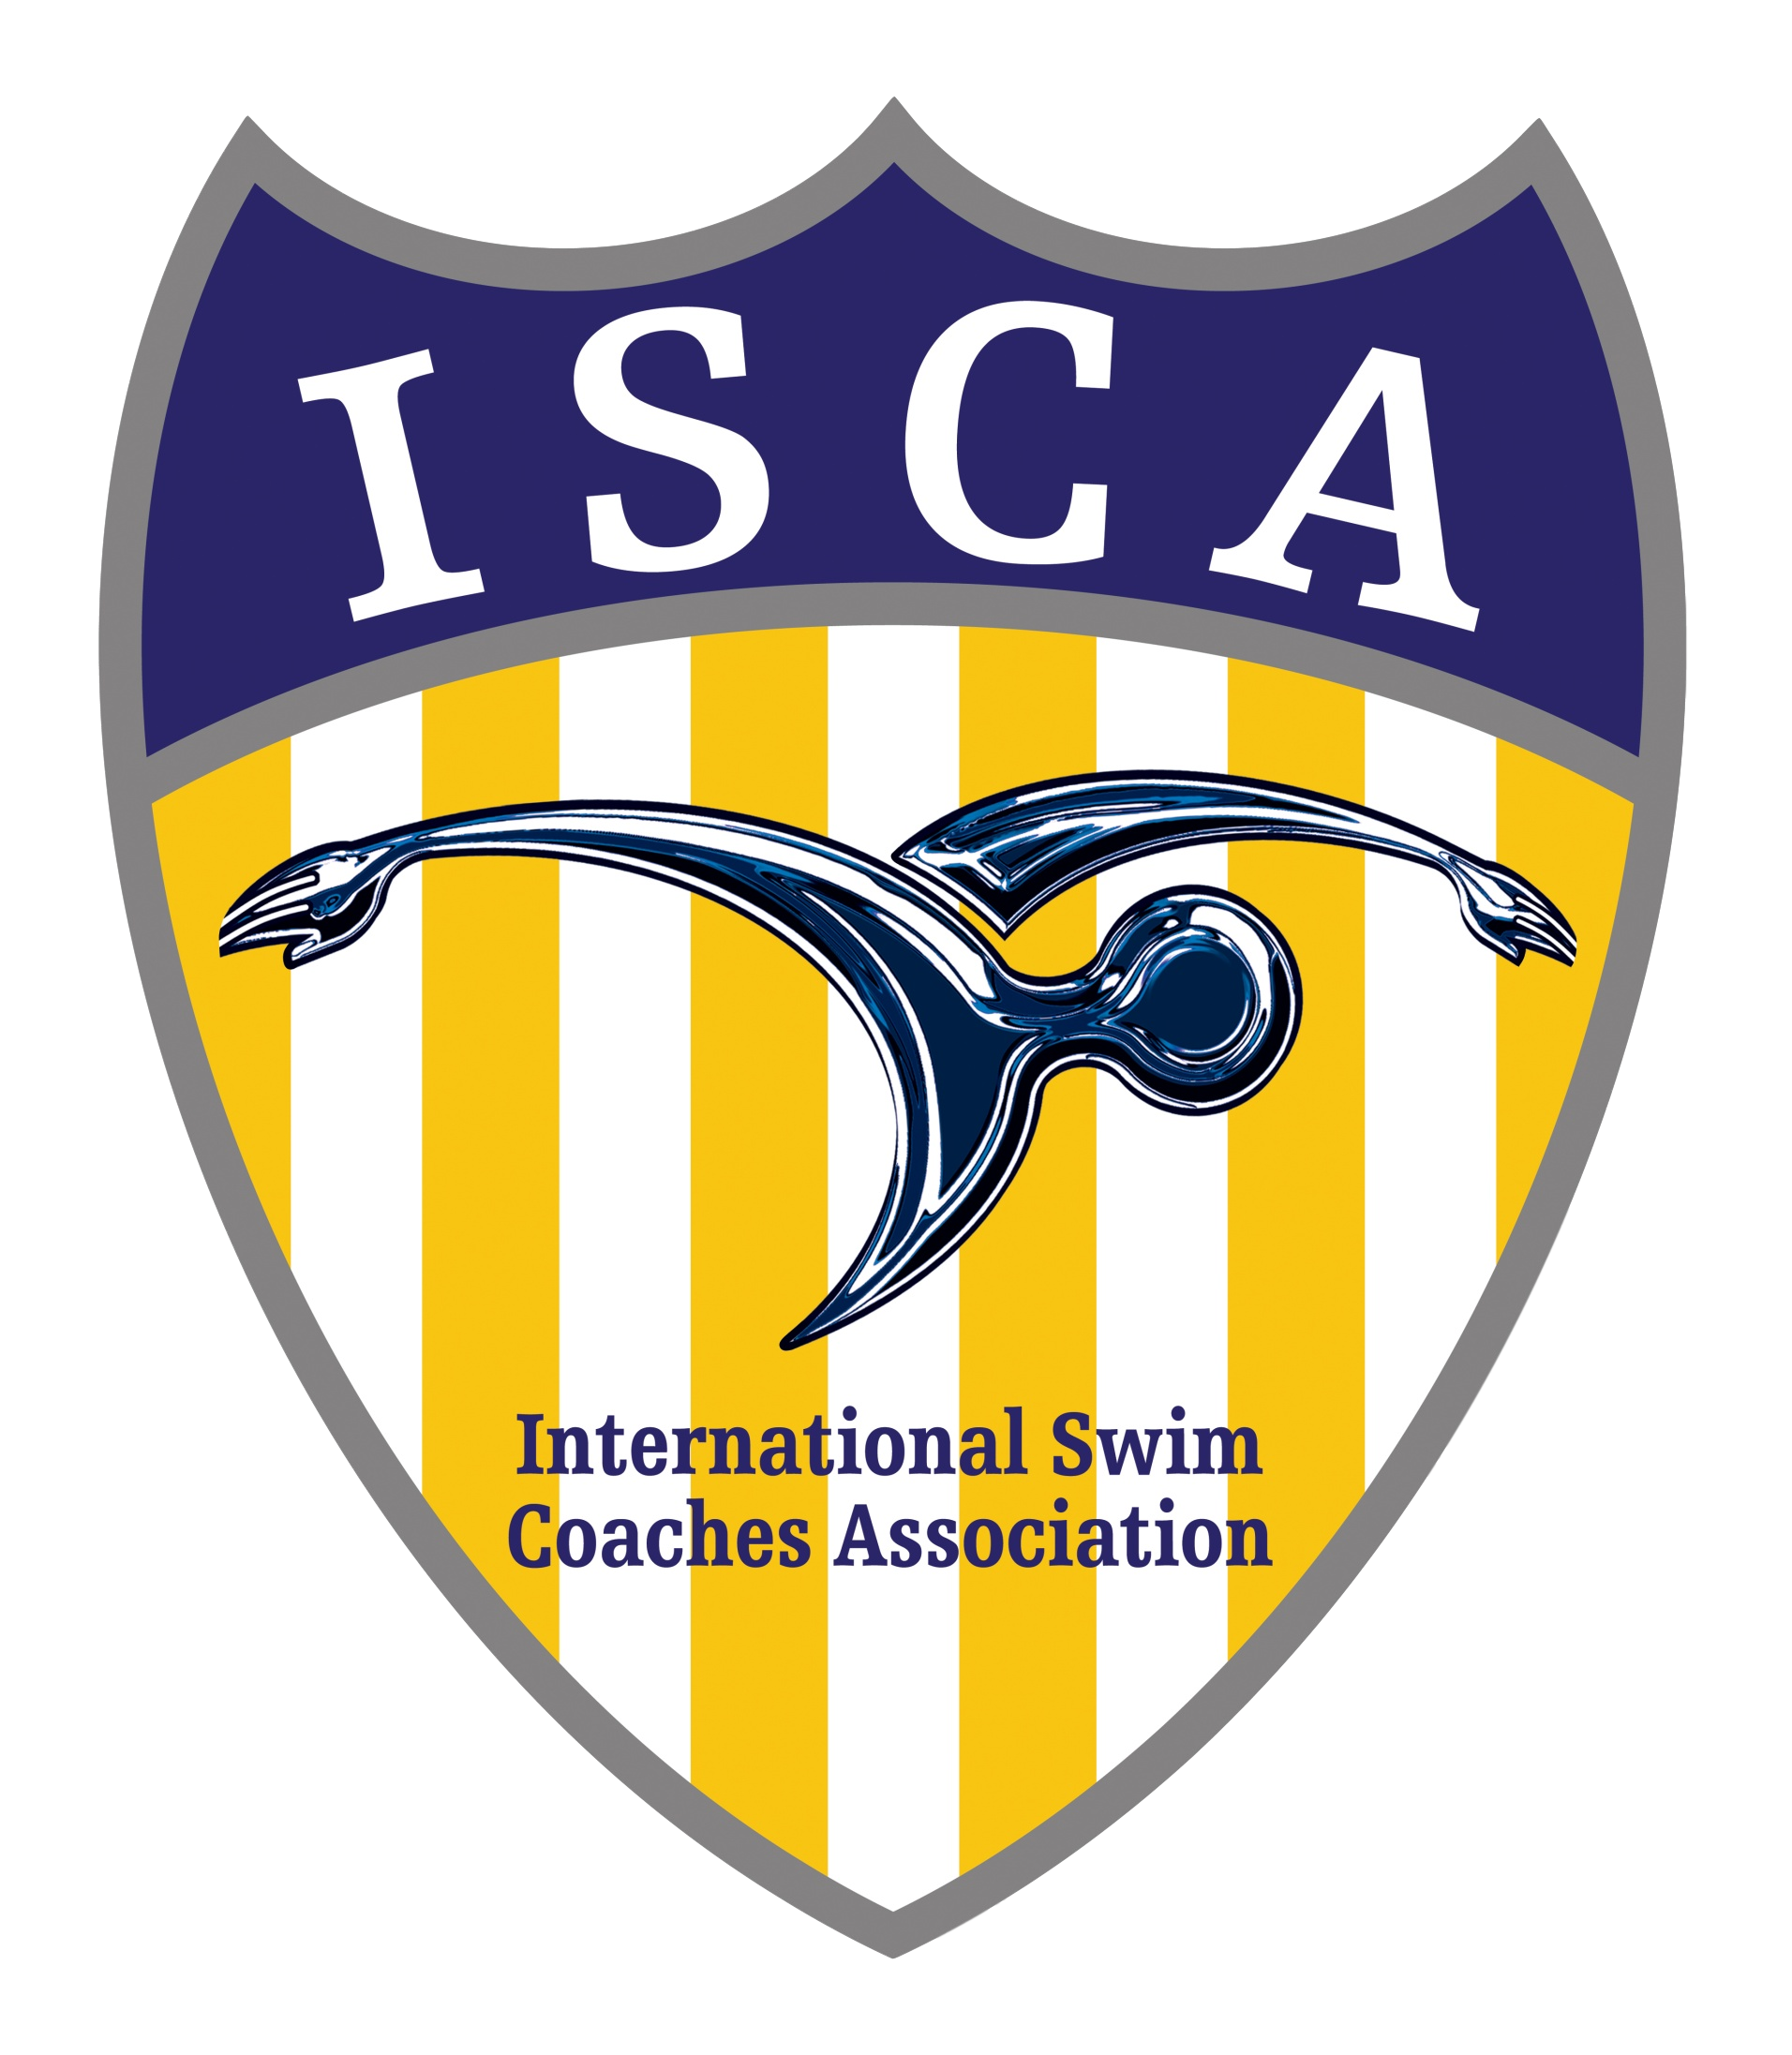 Updates from ISCA Advisors International Swim Coaches Association (ISCA)